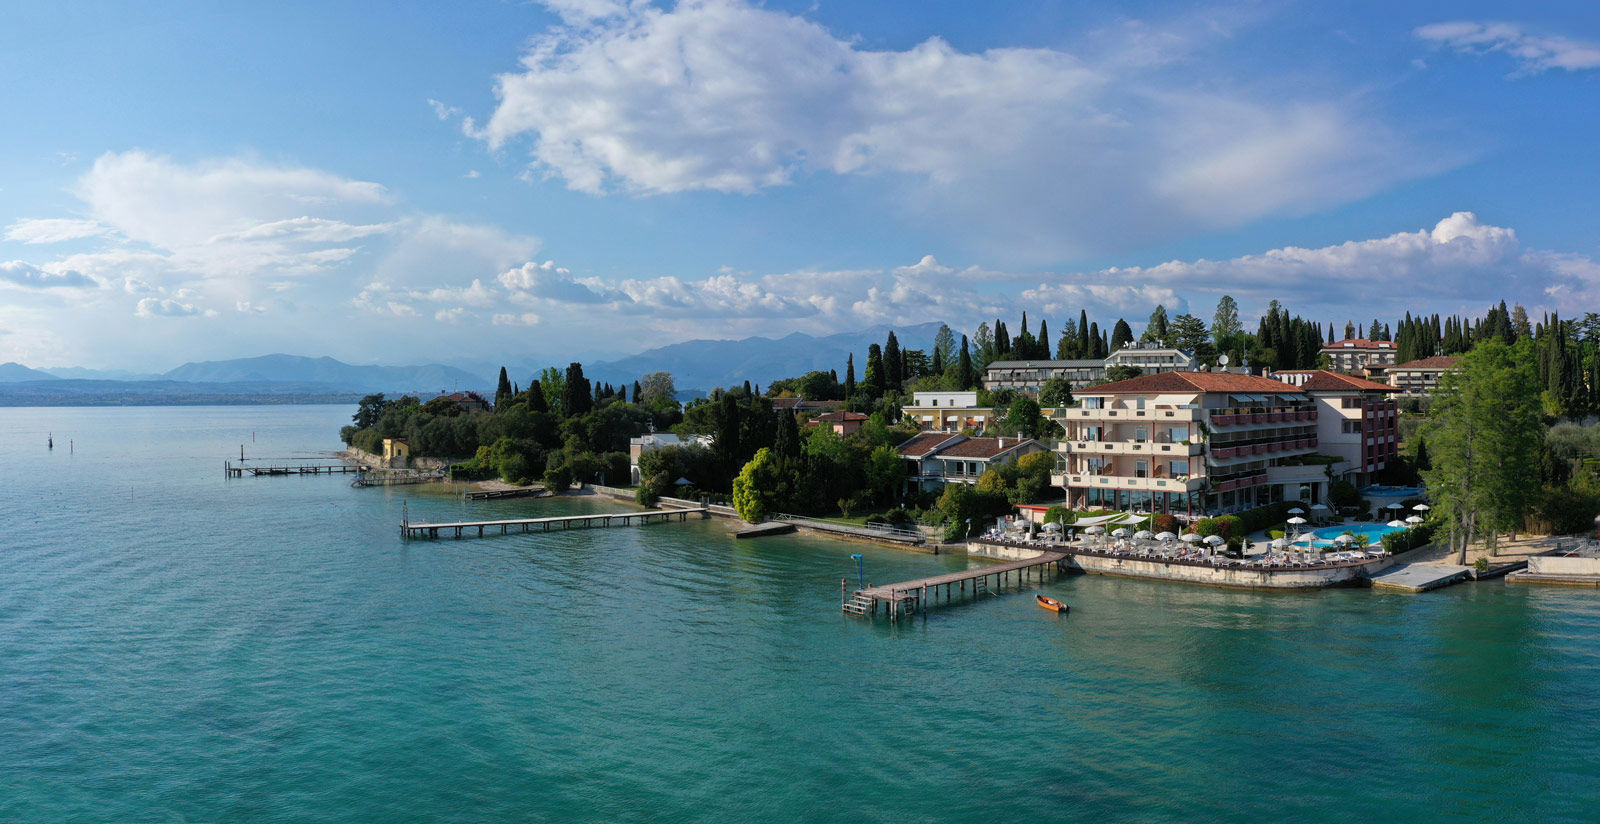 4-star Hotel in Sirmione, Lake Garda 4